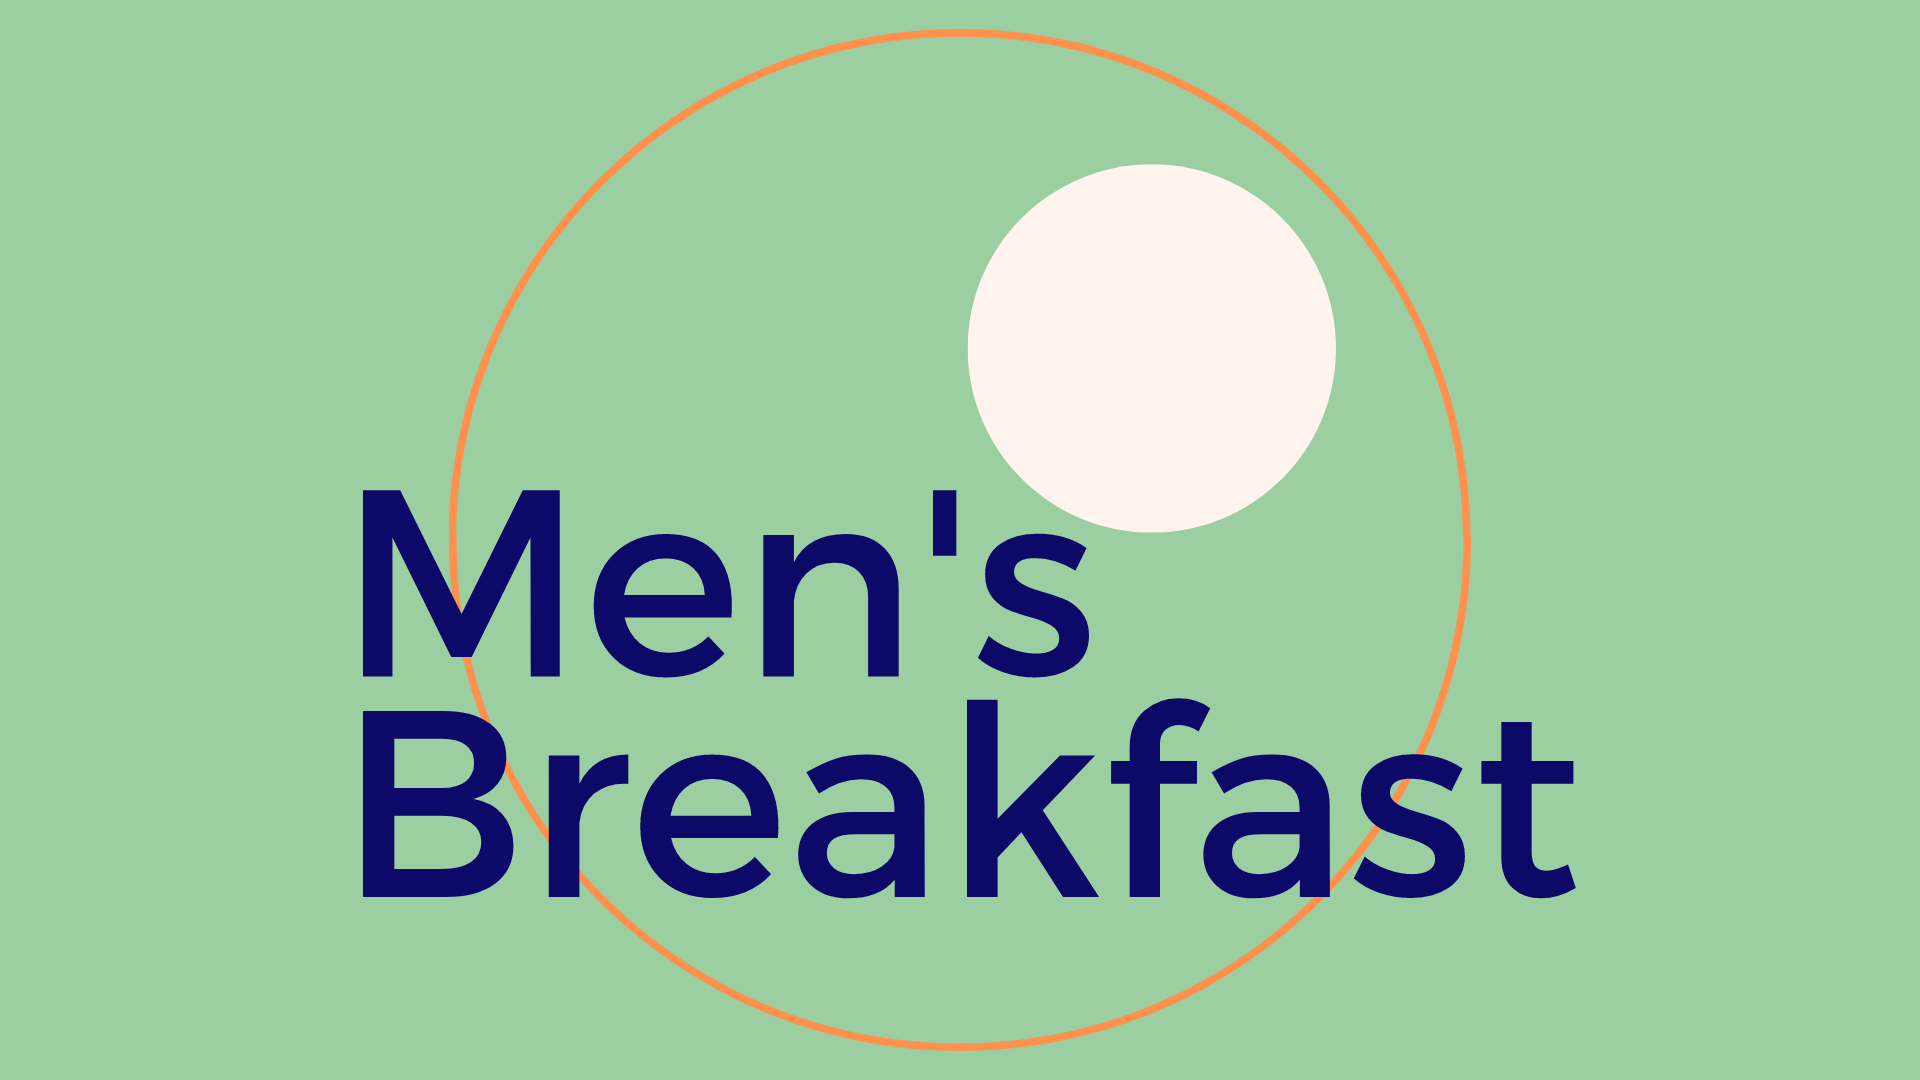 Men's breakfast editable